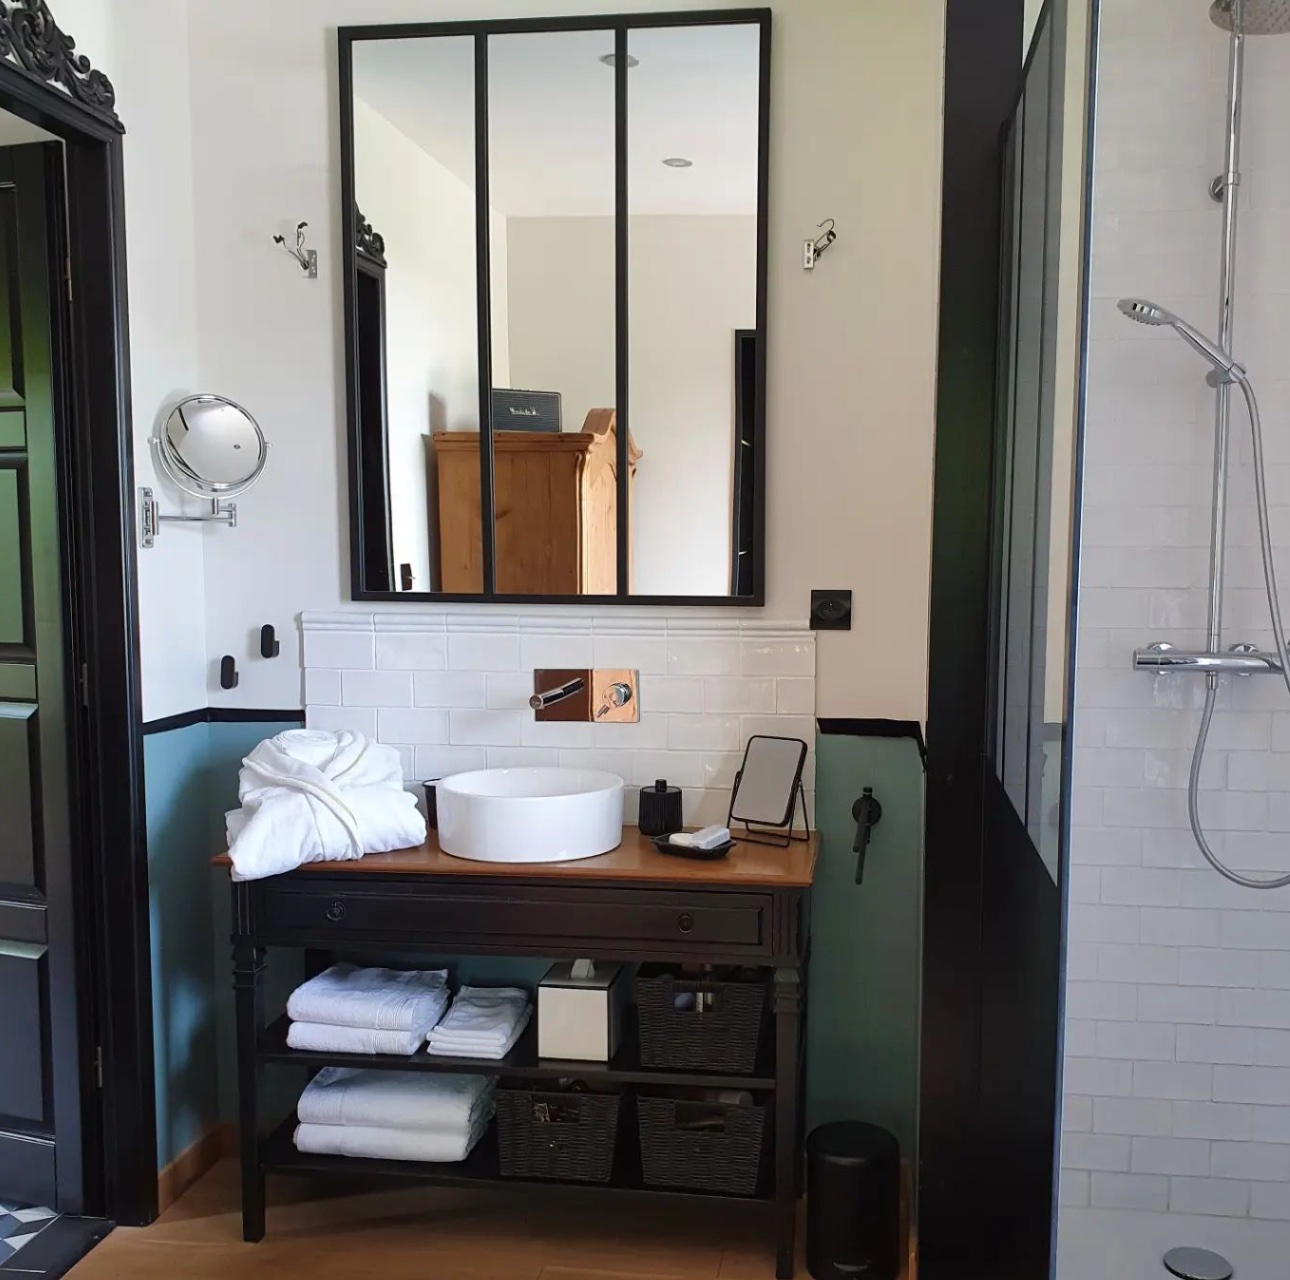 salle de bain miroir noir meuble douche mur brique blanc